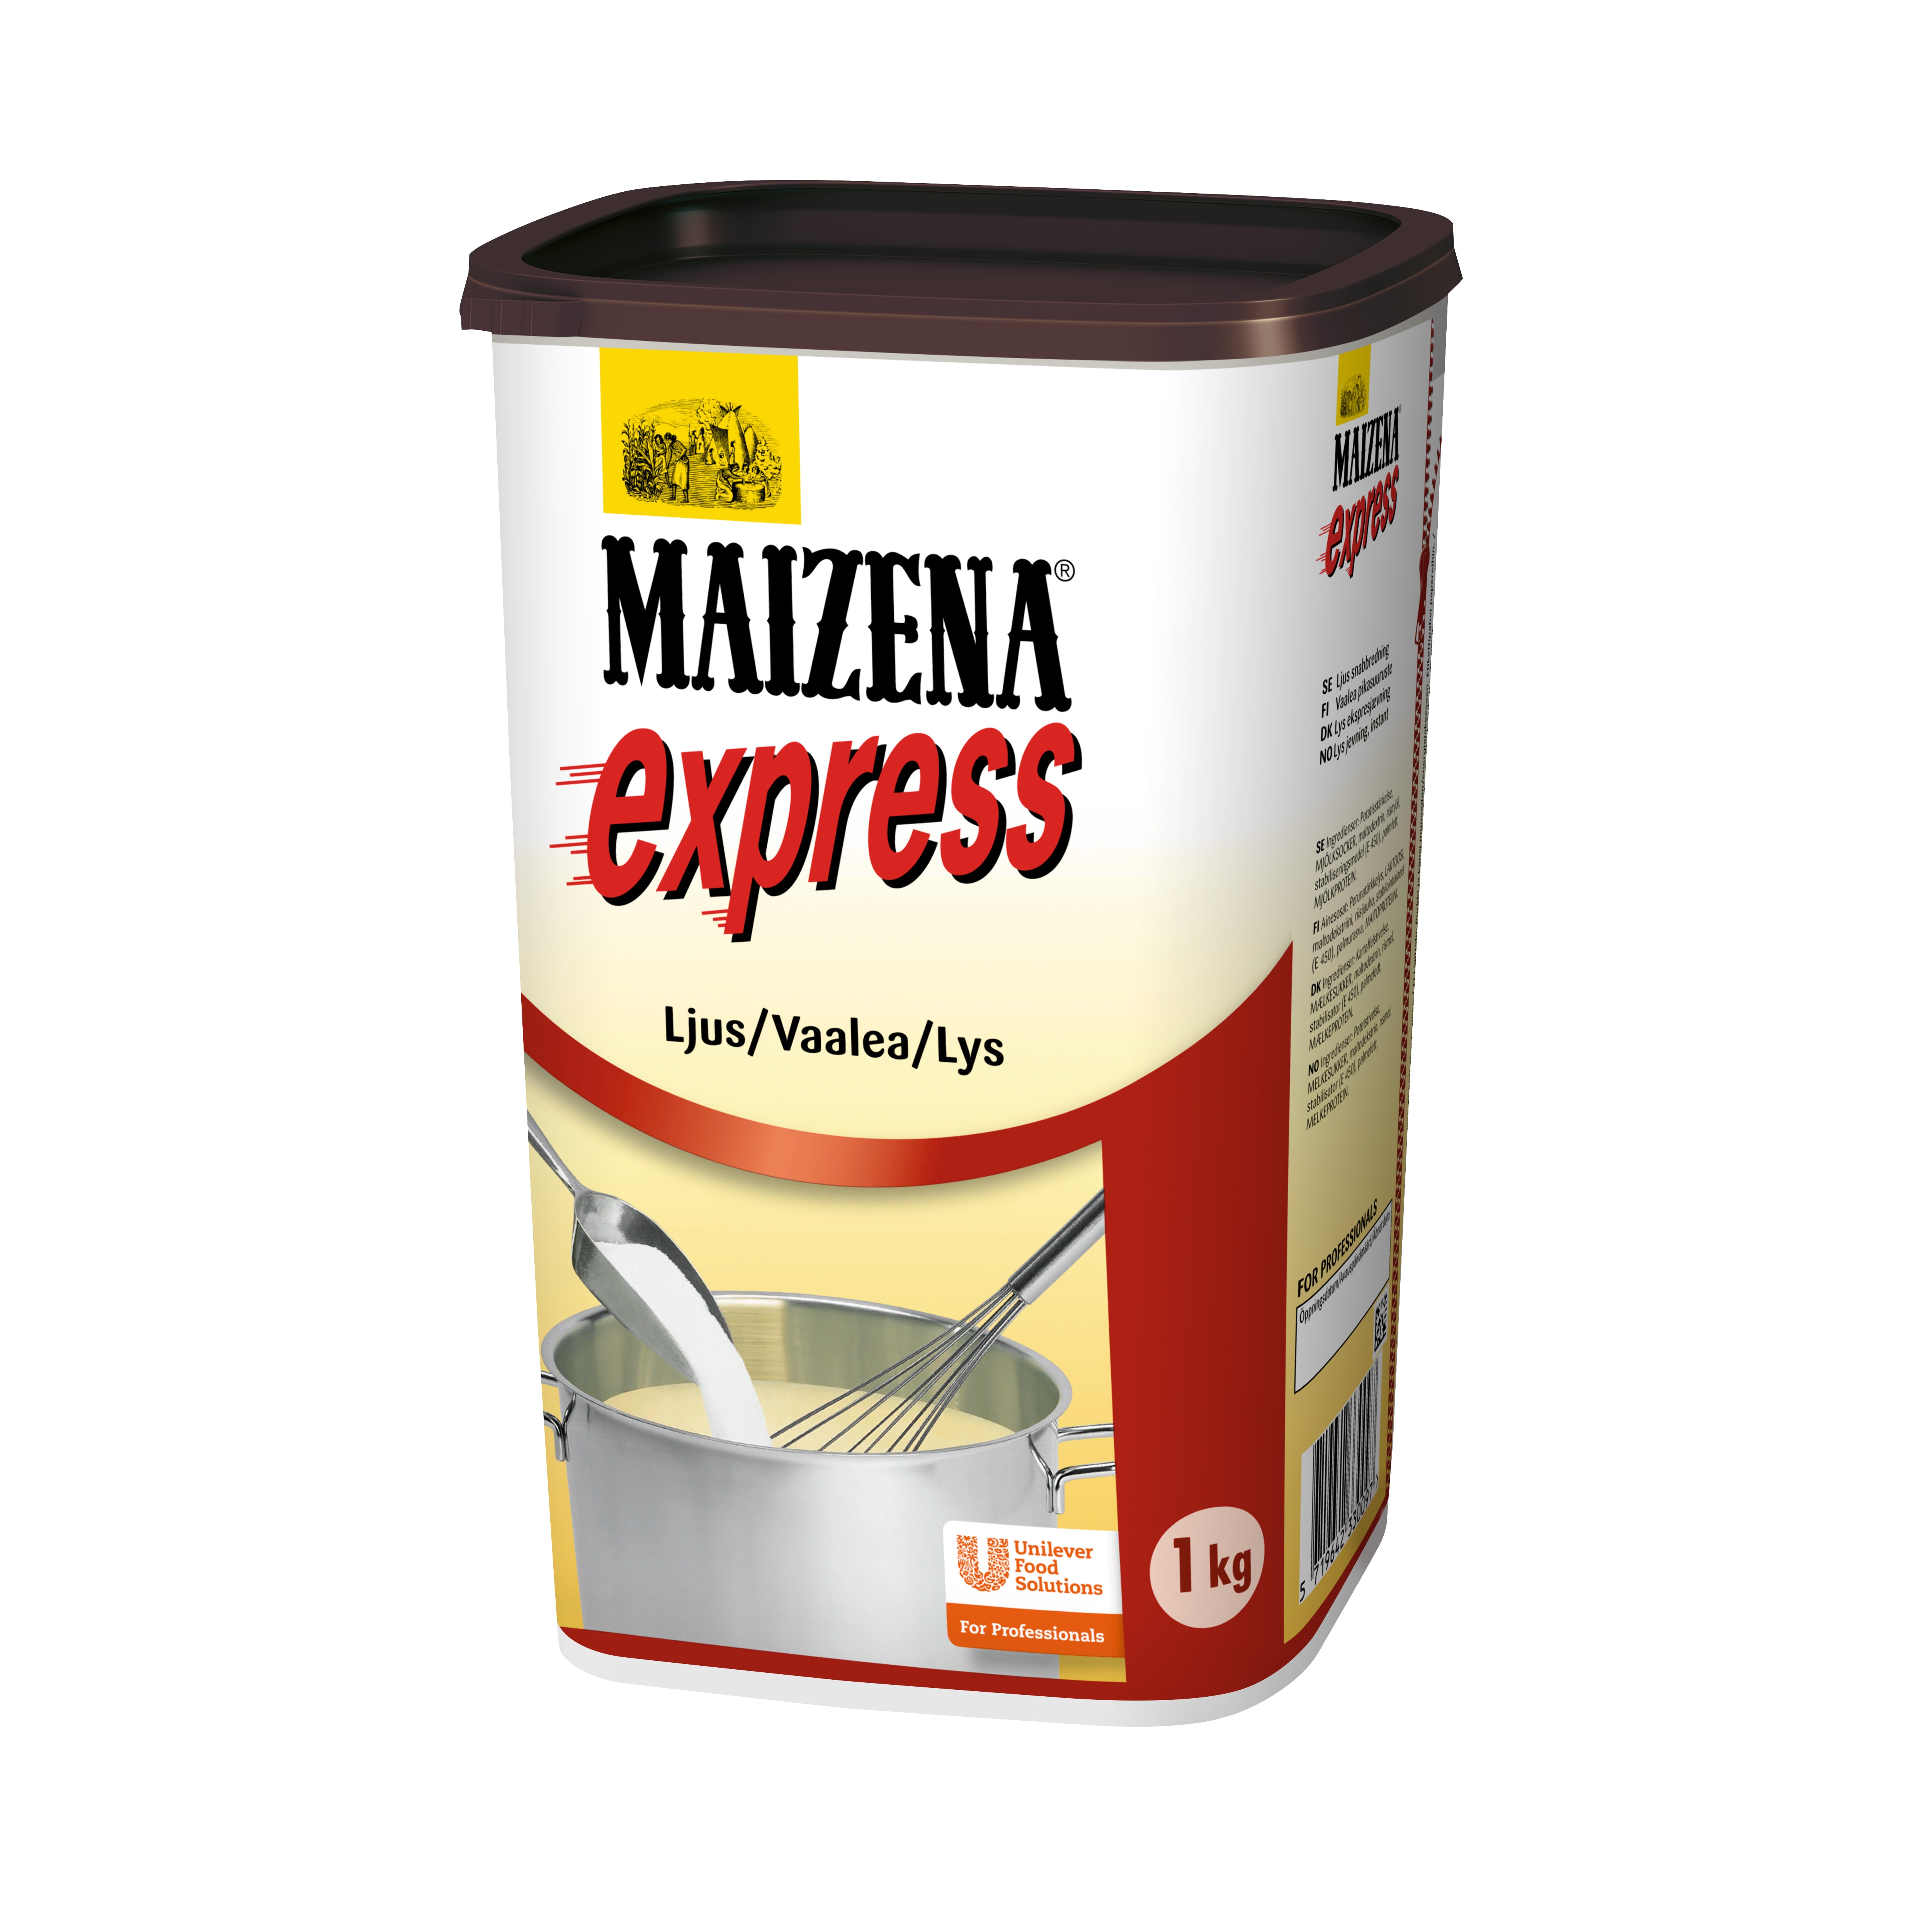 MAIZENA express, lys 1 kg